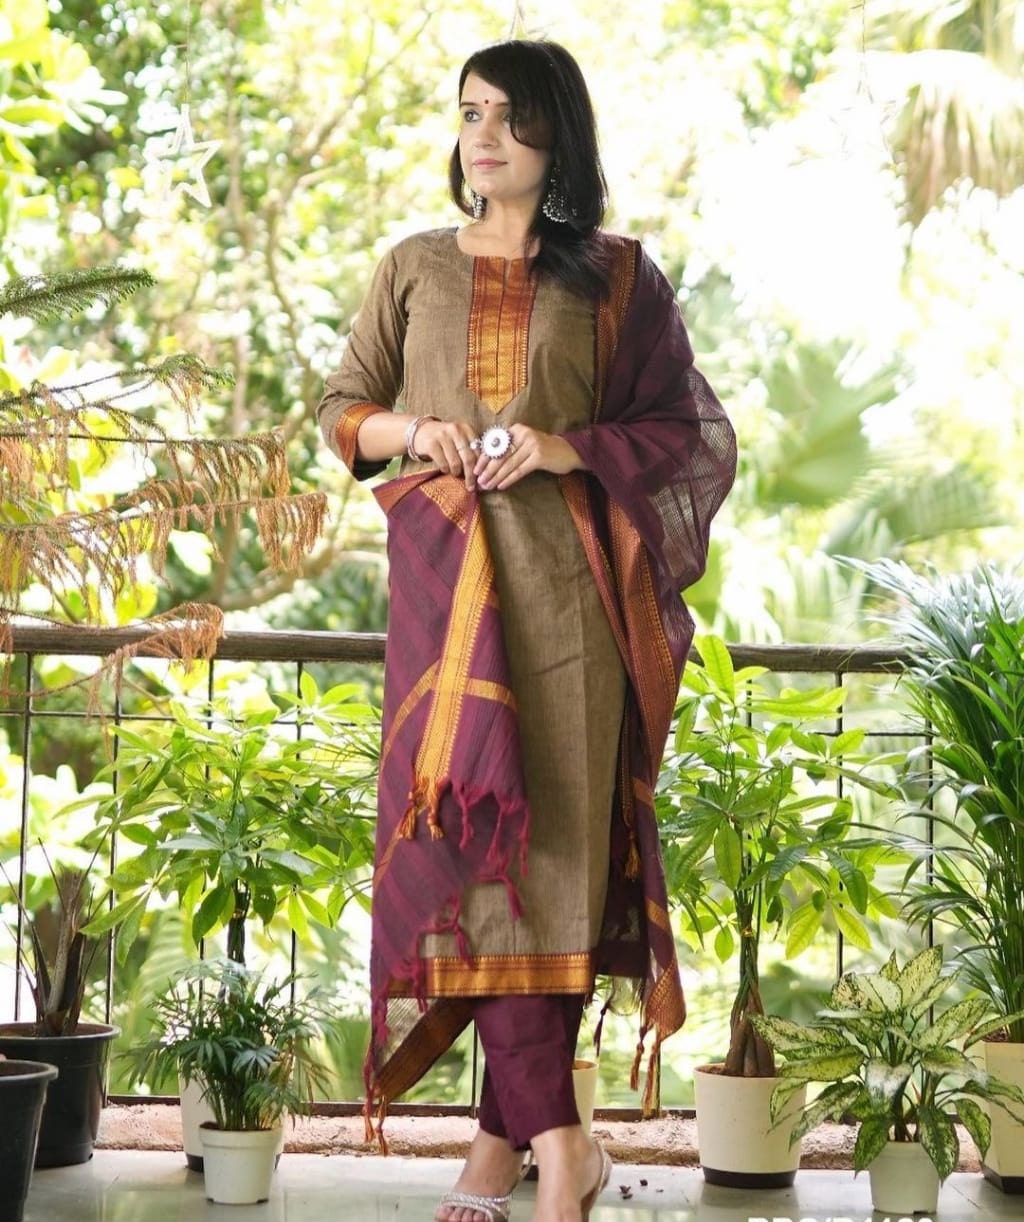 Sinina Red South Cotton Salwar Kameez Suit Unstitched Dress Material-K18